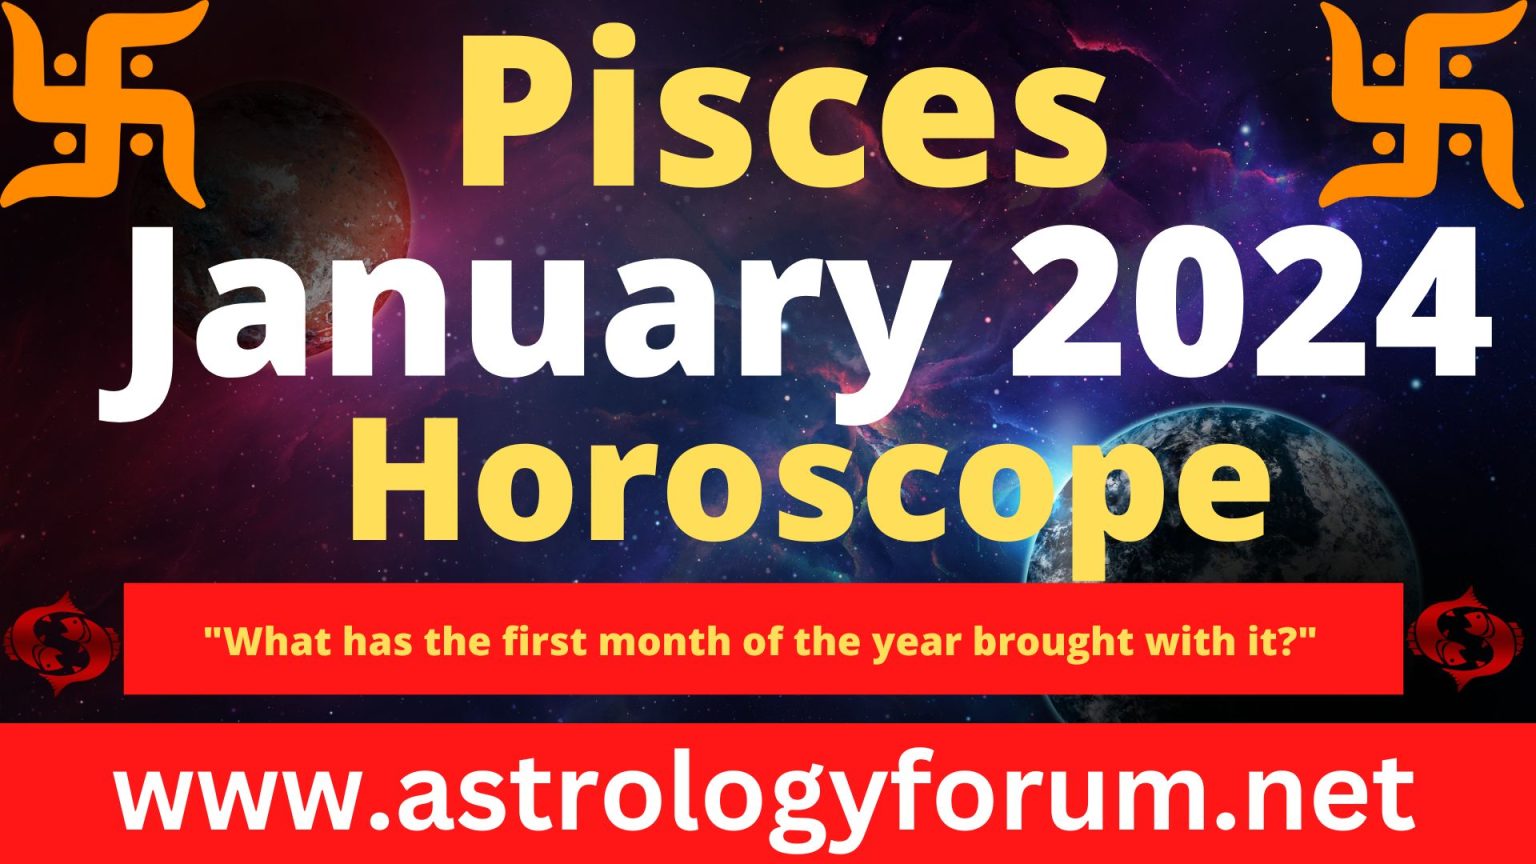 pisces january 2024 horoscope Archives Best Ebooks, Mathematics